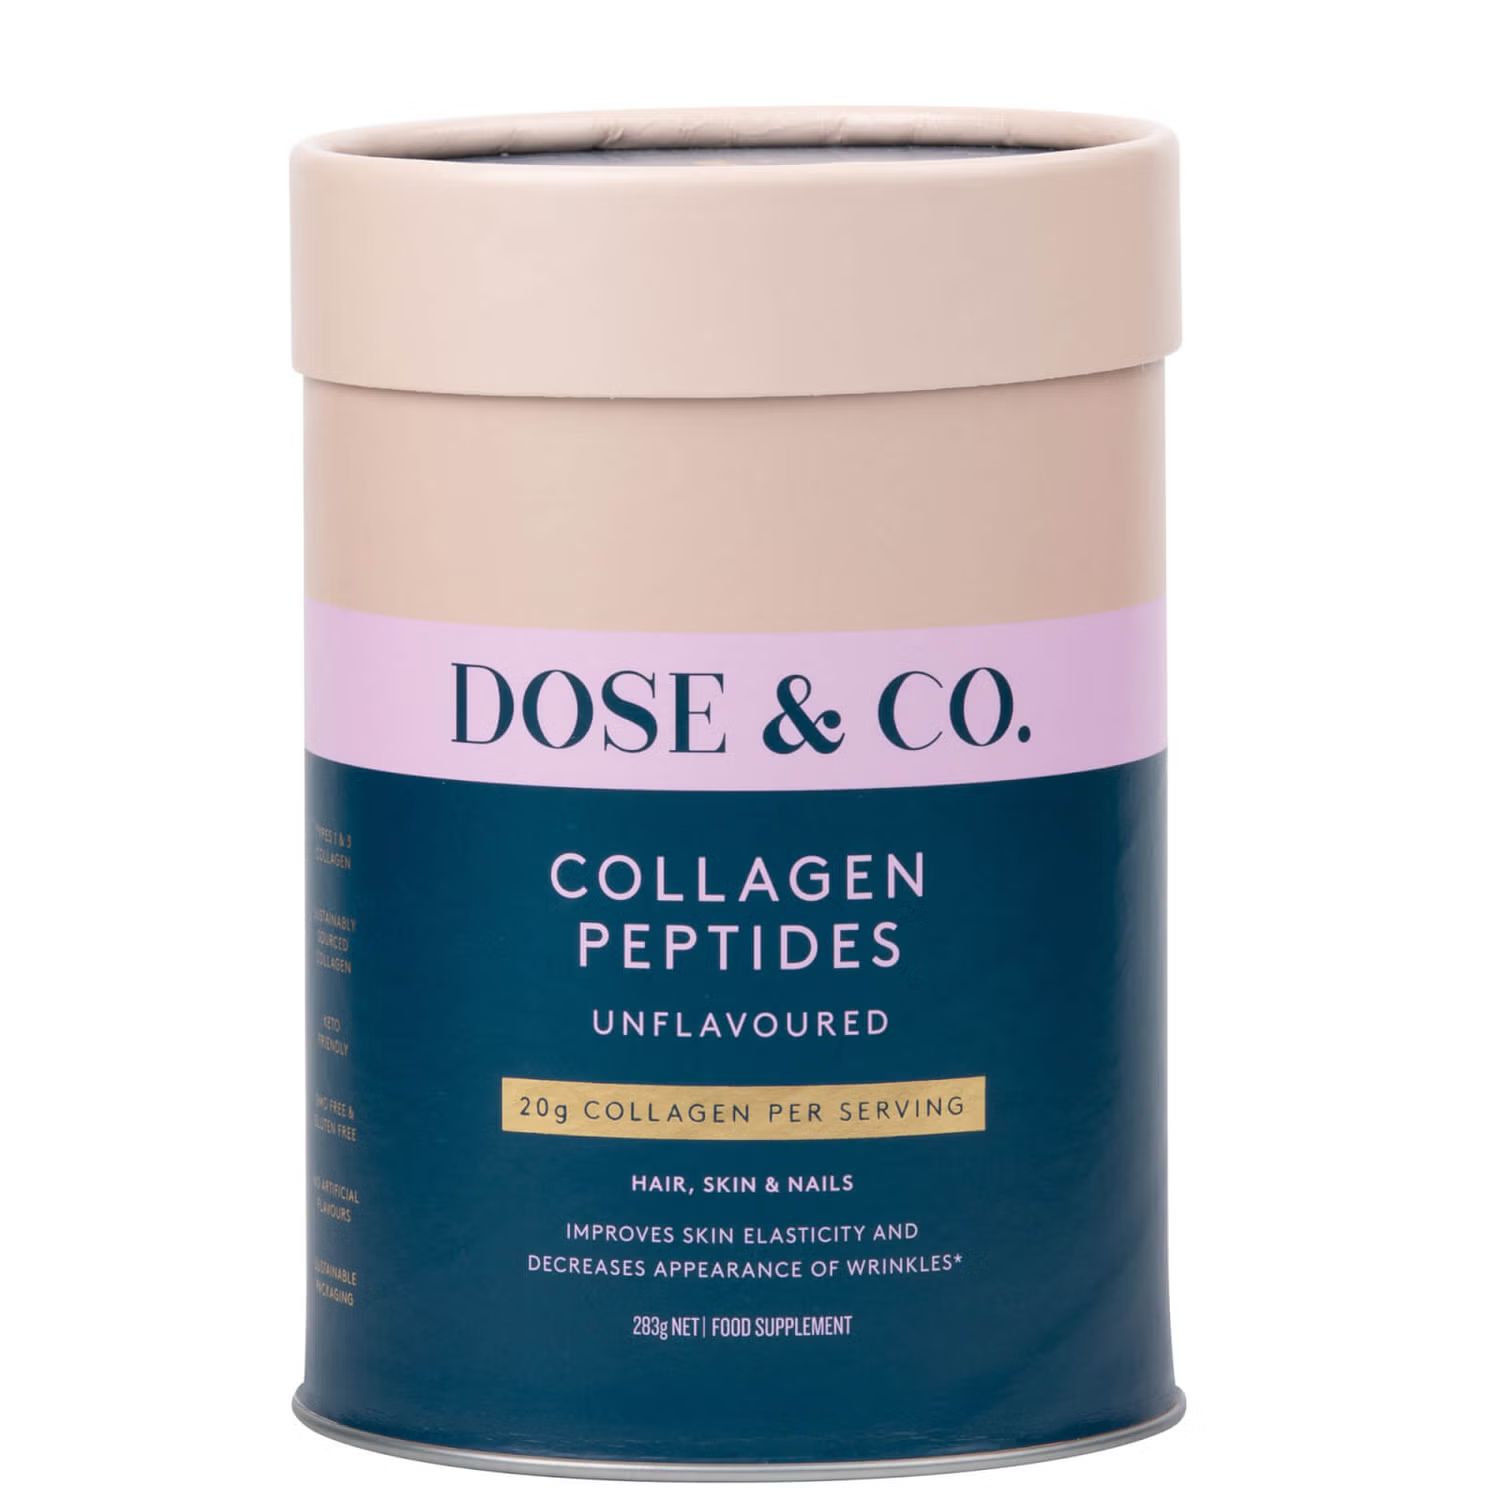 Dose & Co Collagen Peptides Unflavored 283g | Lookfantastic US